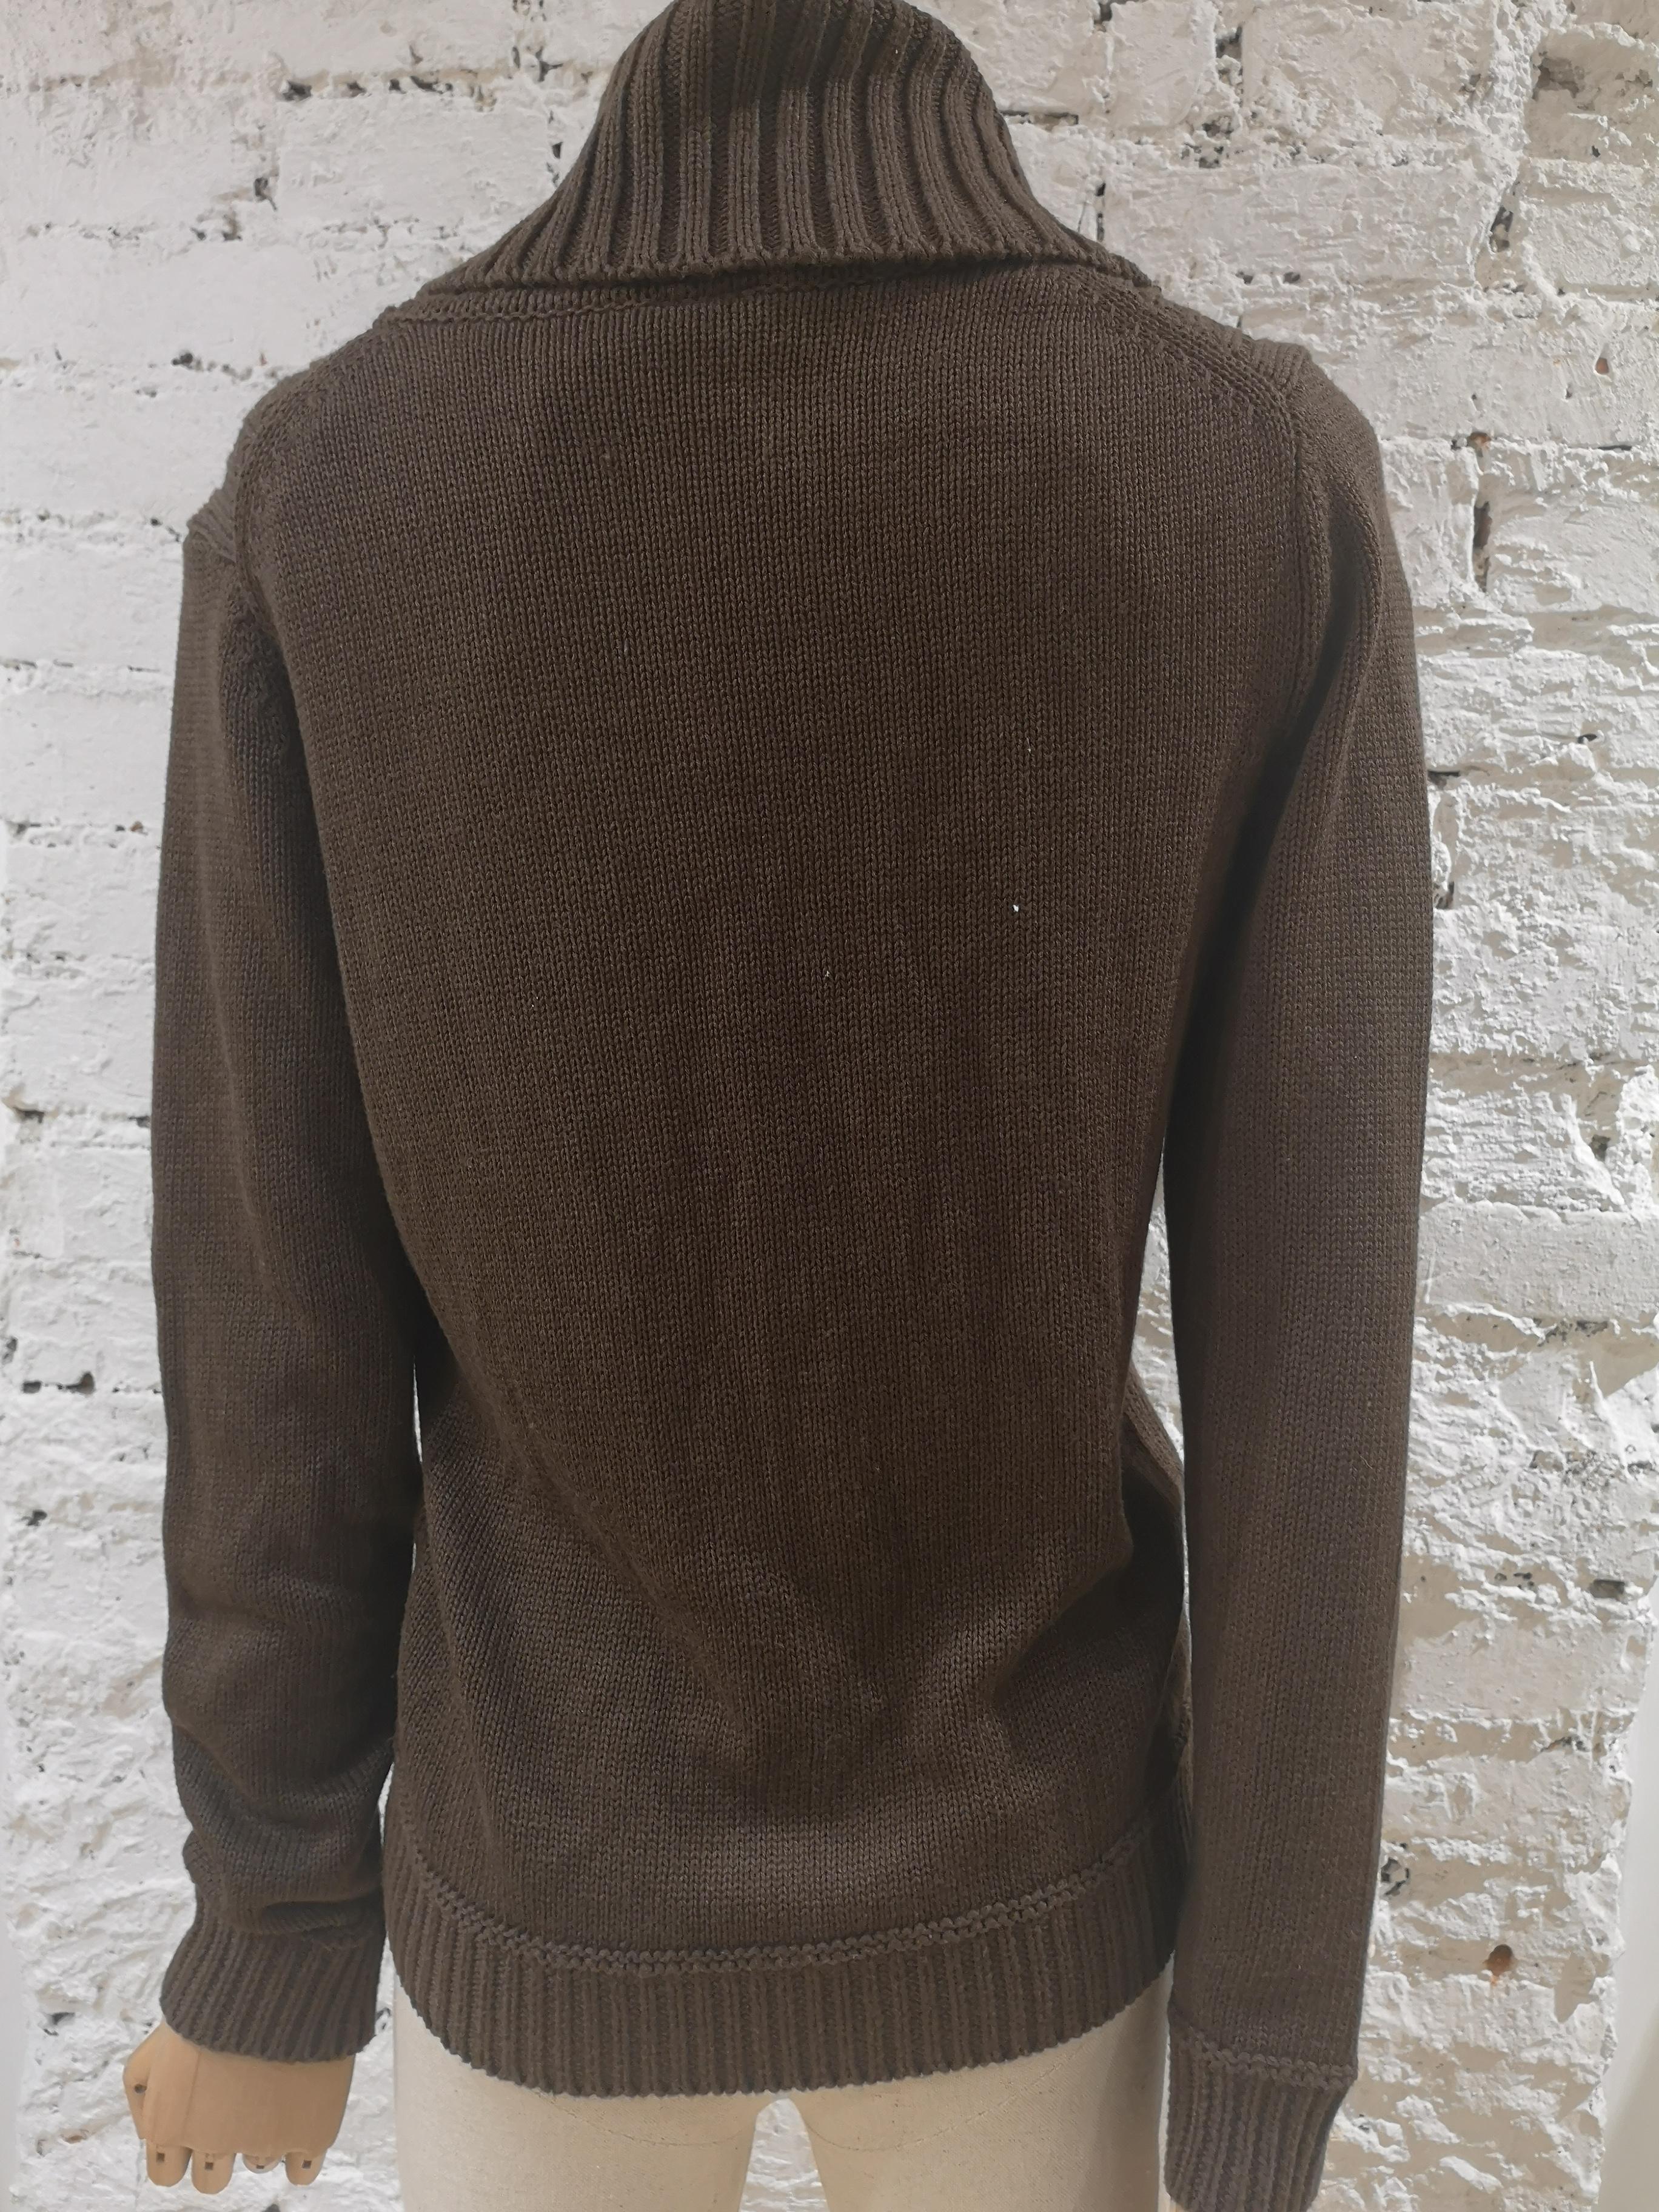 Women's or Men's Esprit brown wool sweater / cardigan For Sale